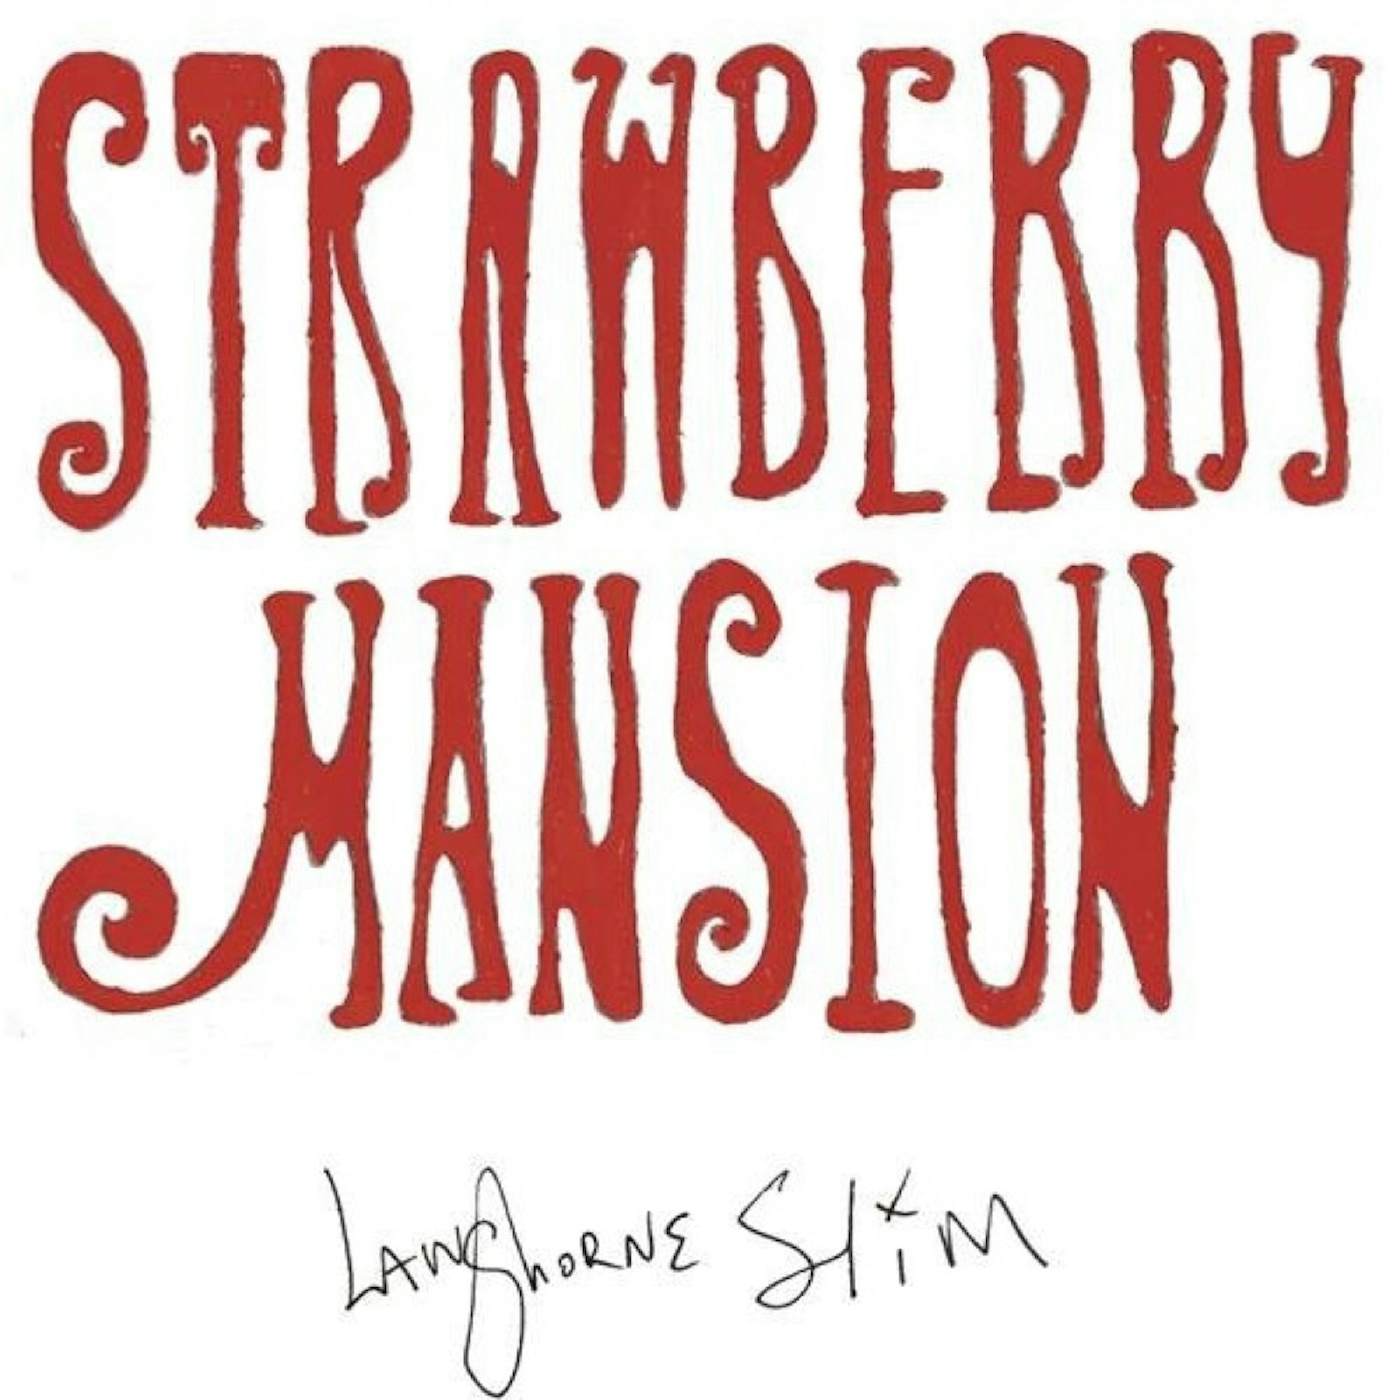 Langhorne Slim Strawberry Mansion Vinyl Record